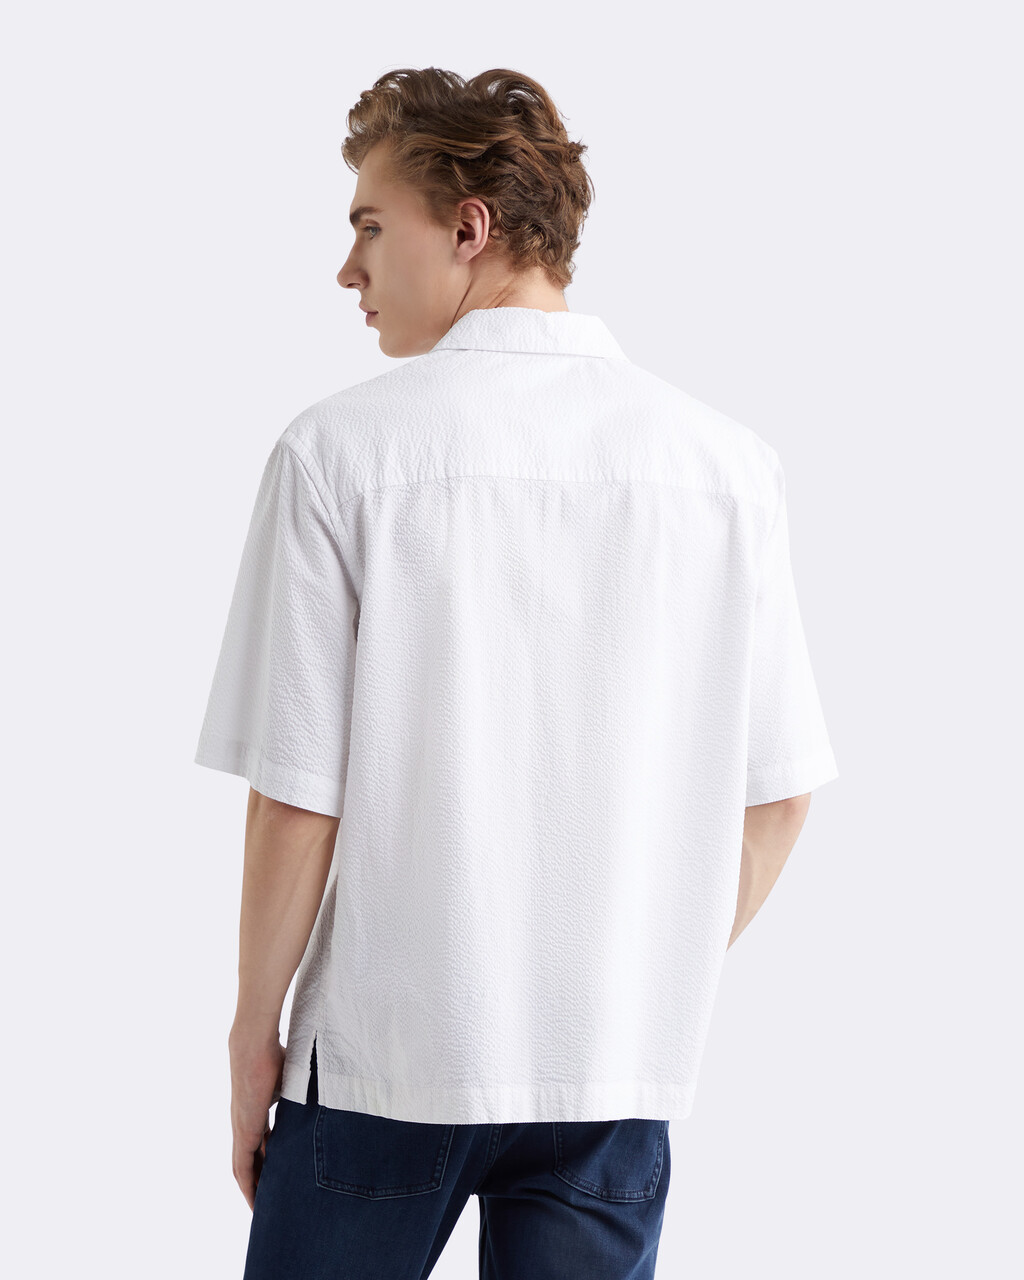 Seersucker Short Sleeve Shirt, BRIGHT WHITE, hi-res